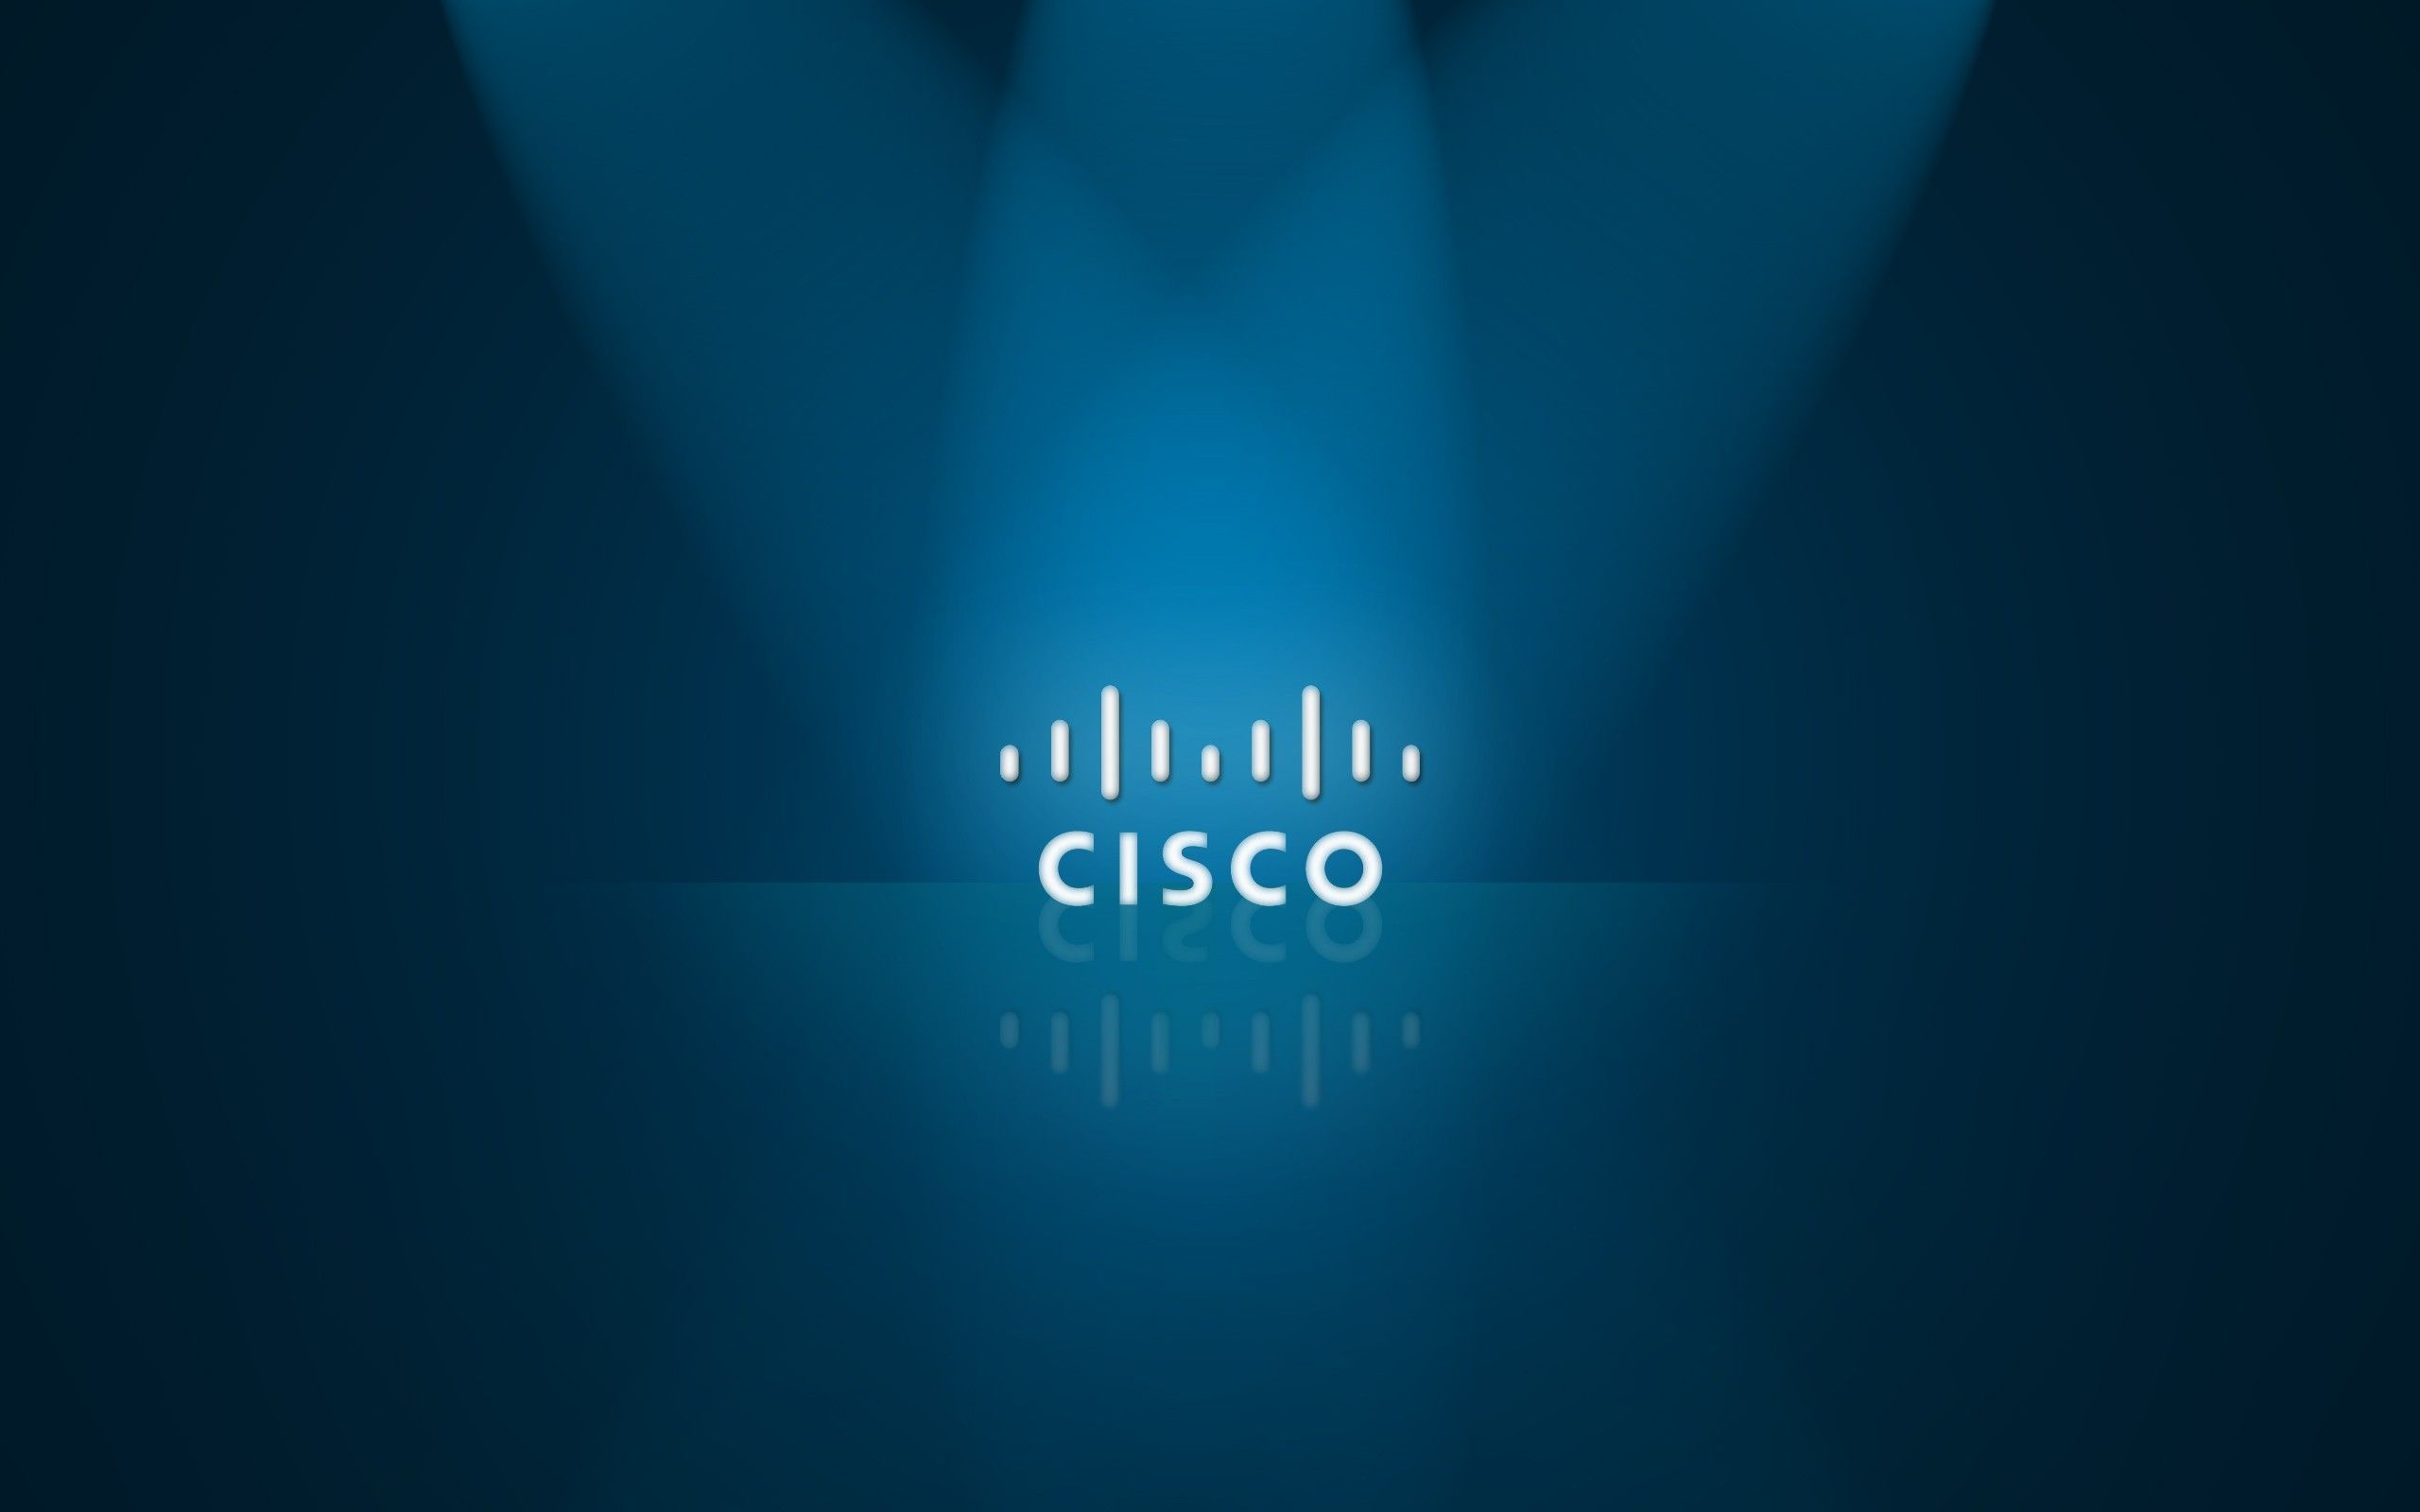 Cisco Phone Wallpaper Top Background